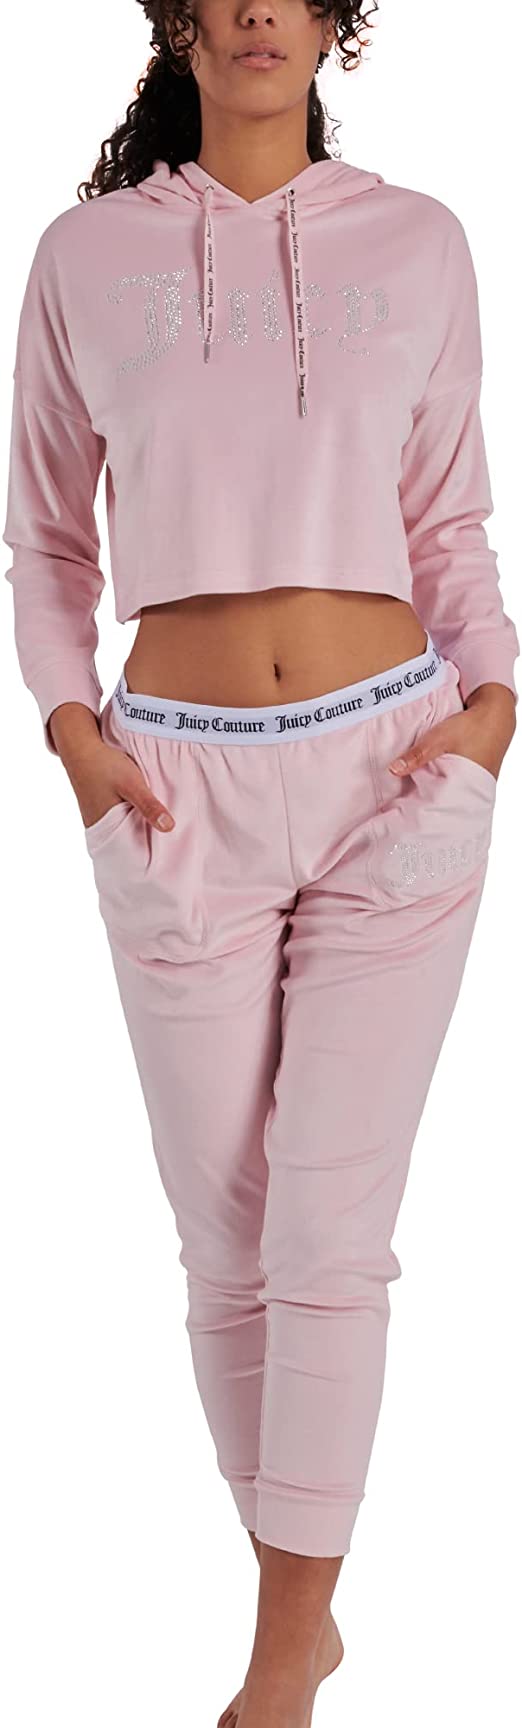 Juicy Couture, Intimates & Sleepwear